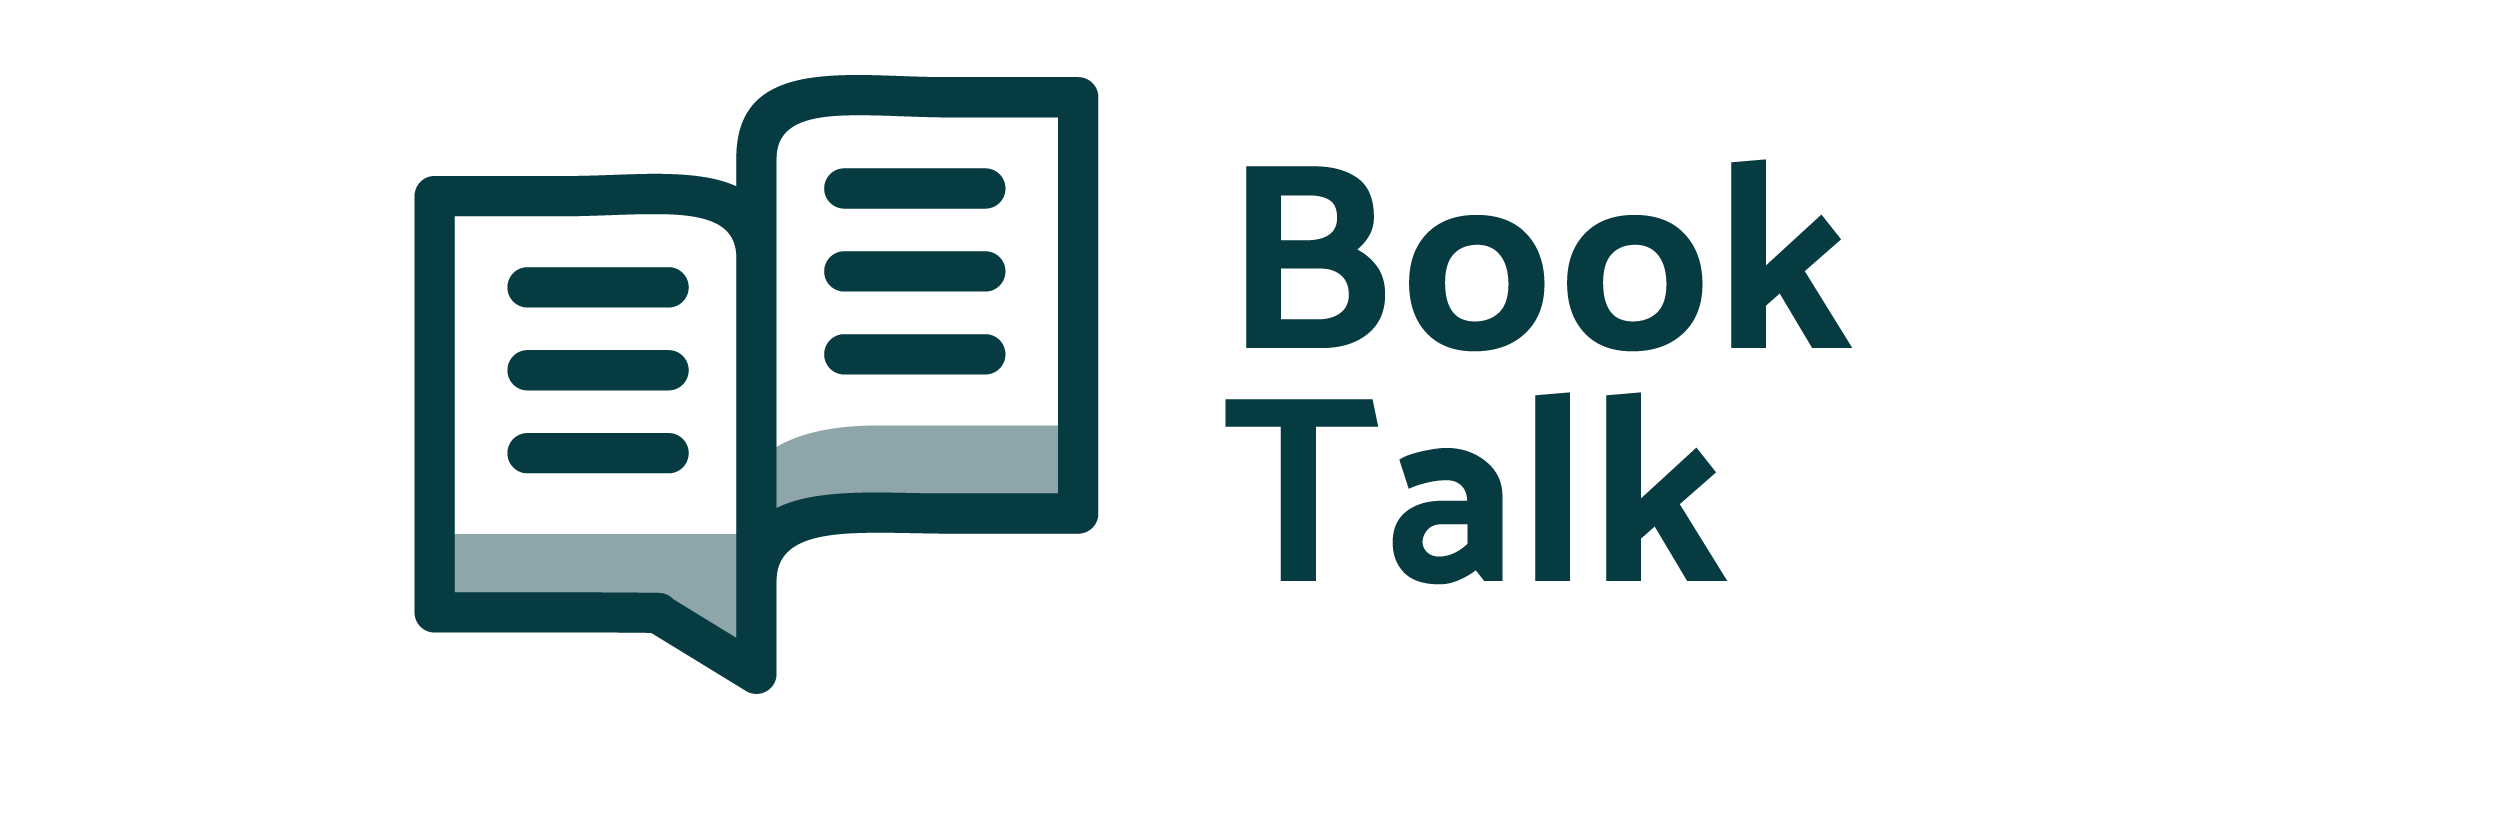 Book talk